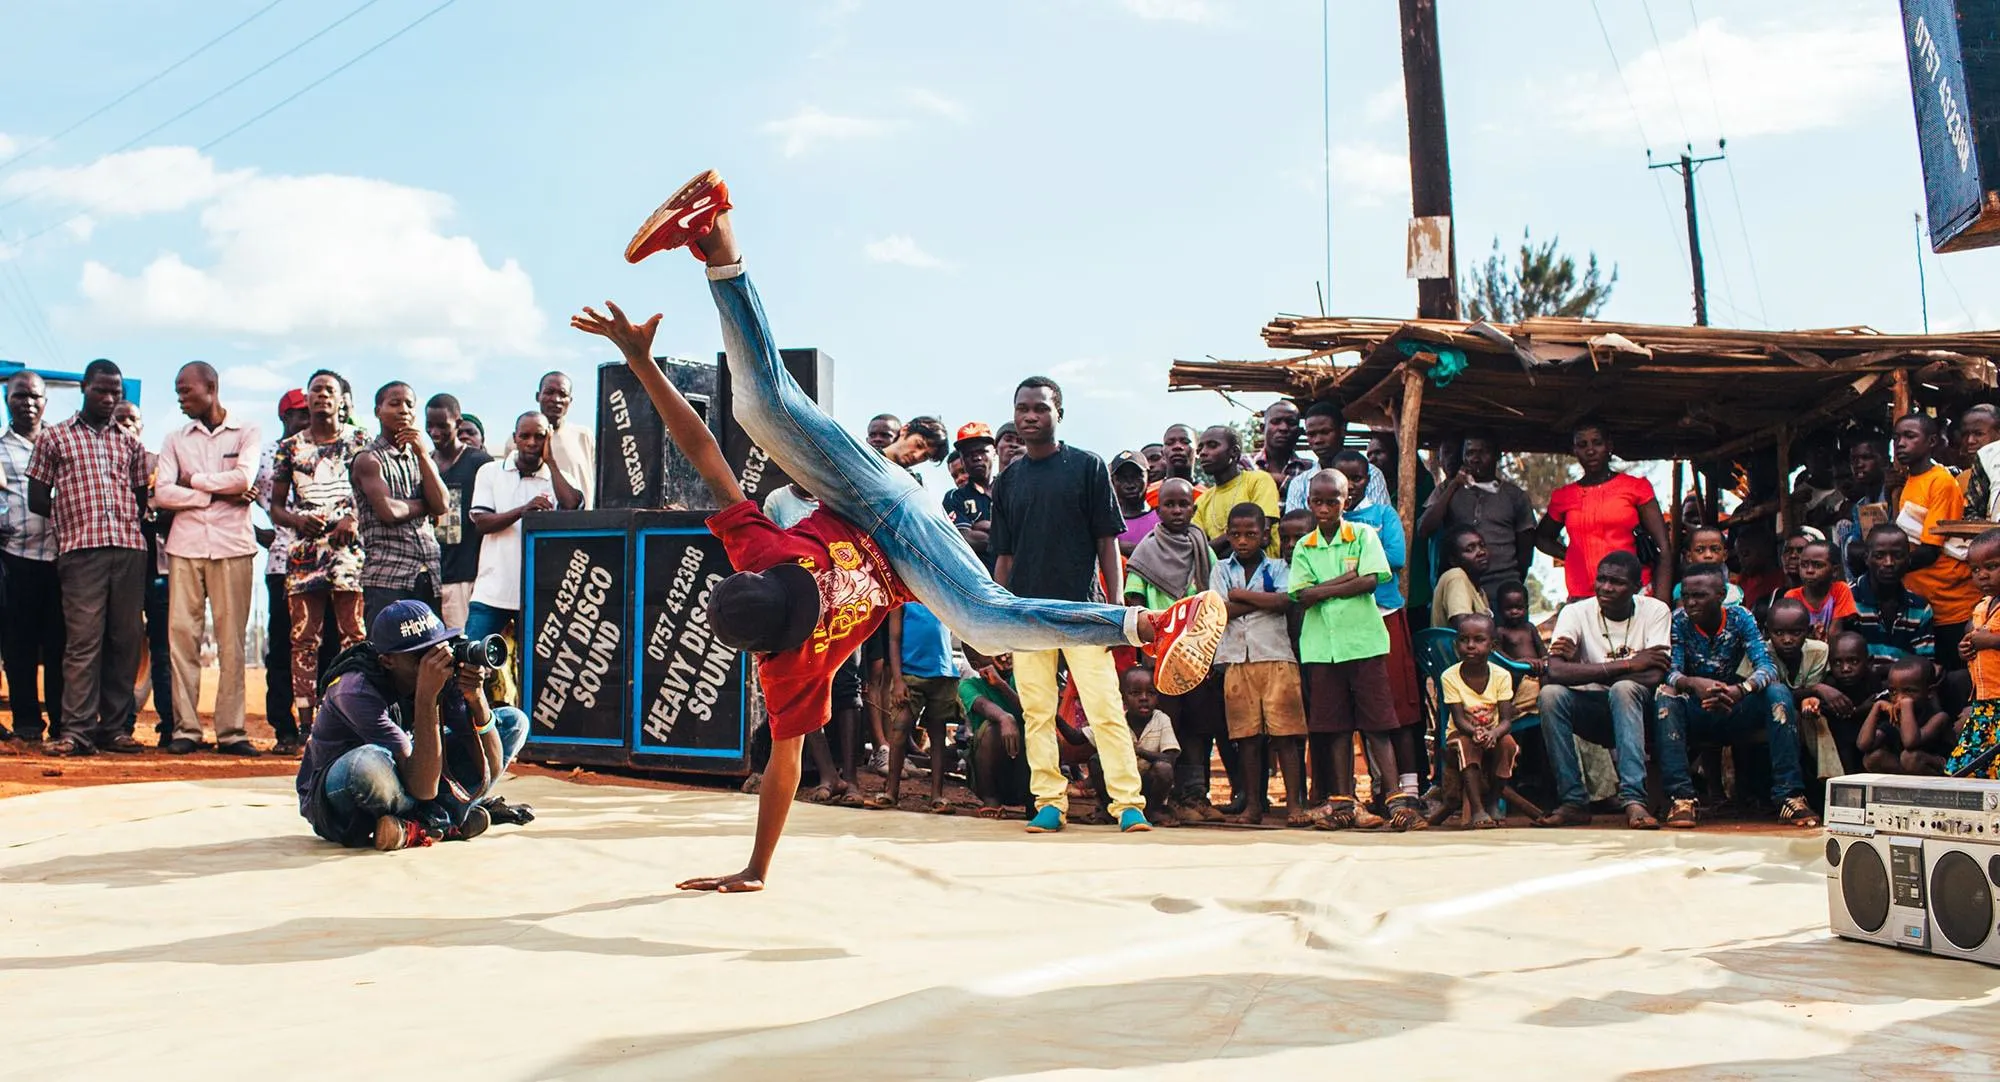 People breakdancing in front of a crowd in Uganda